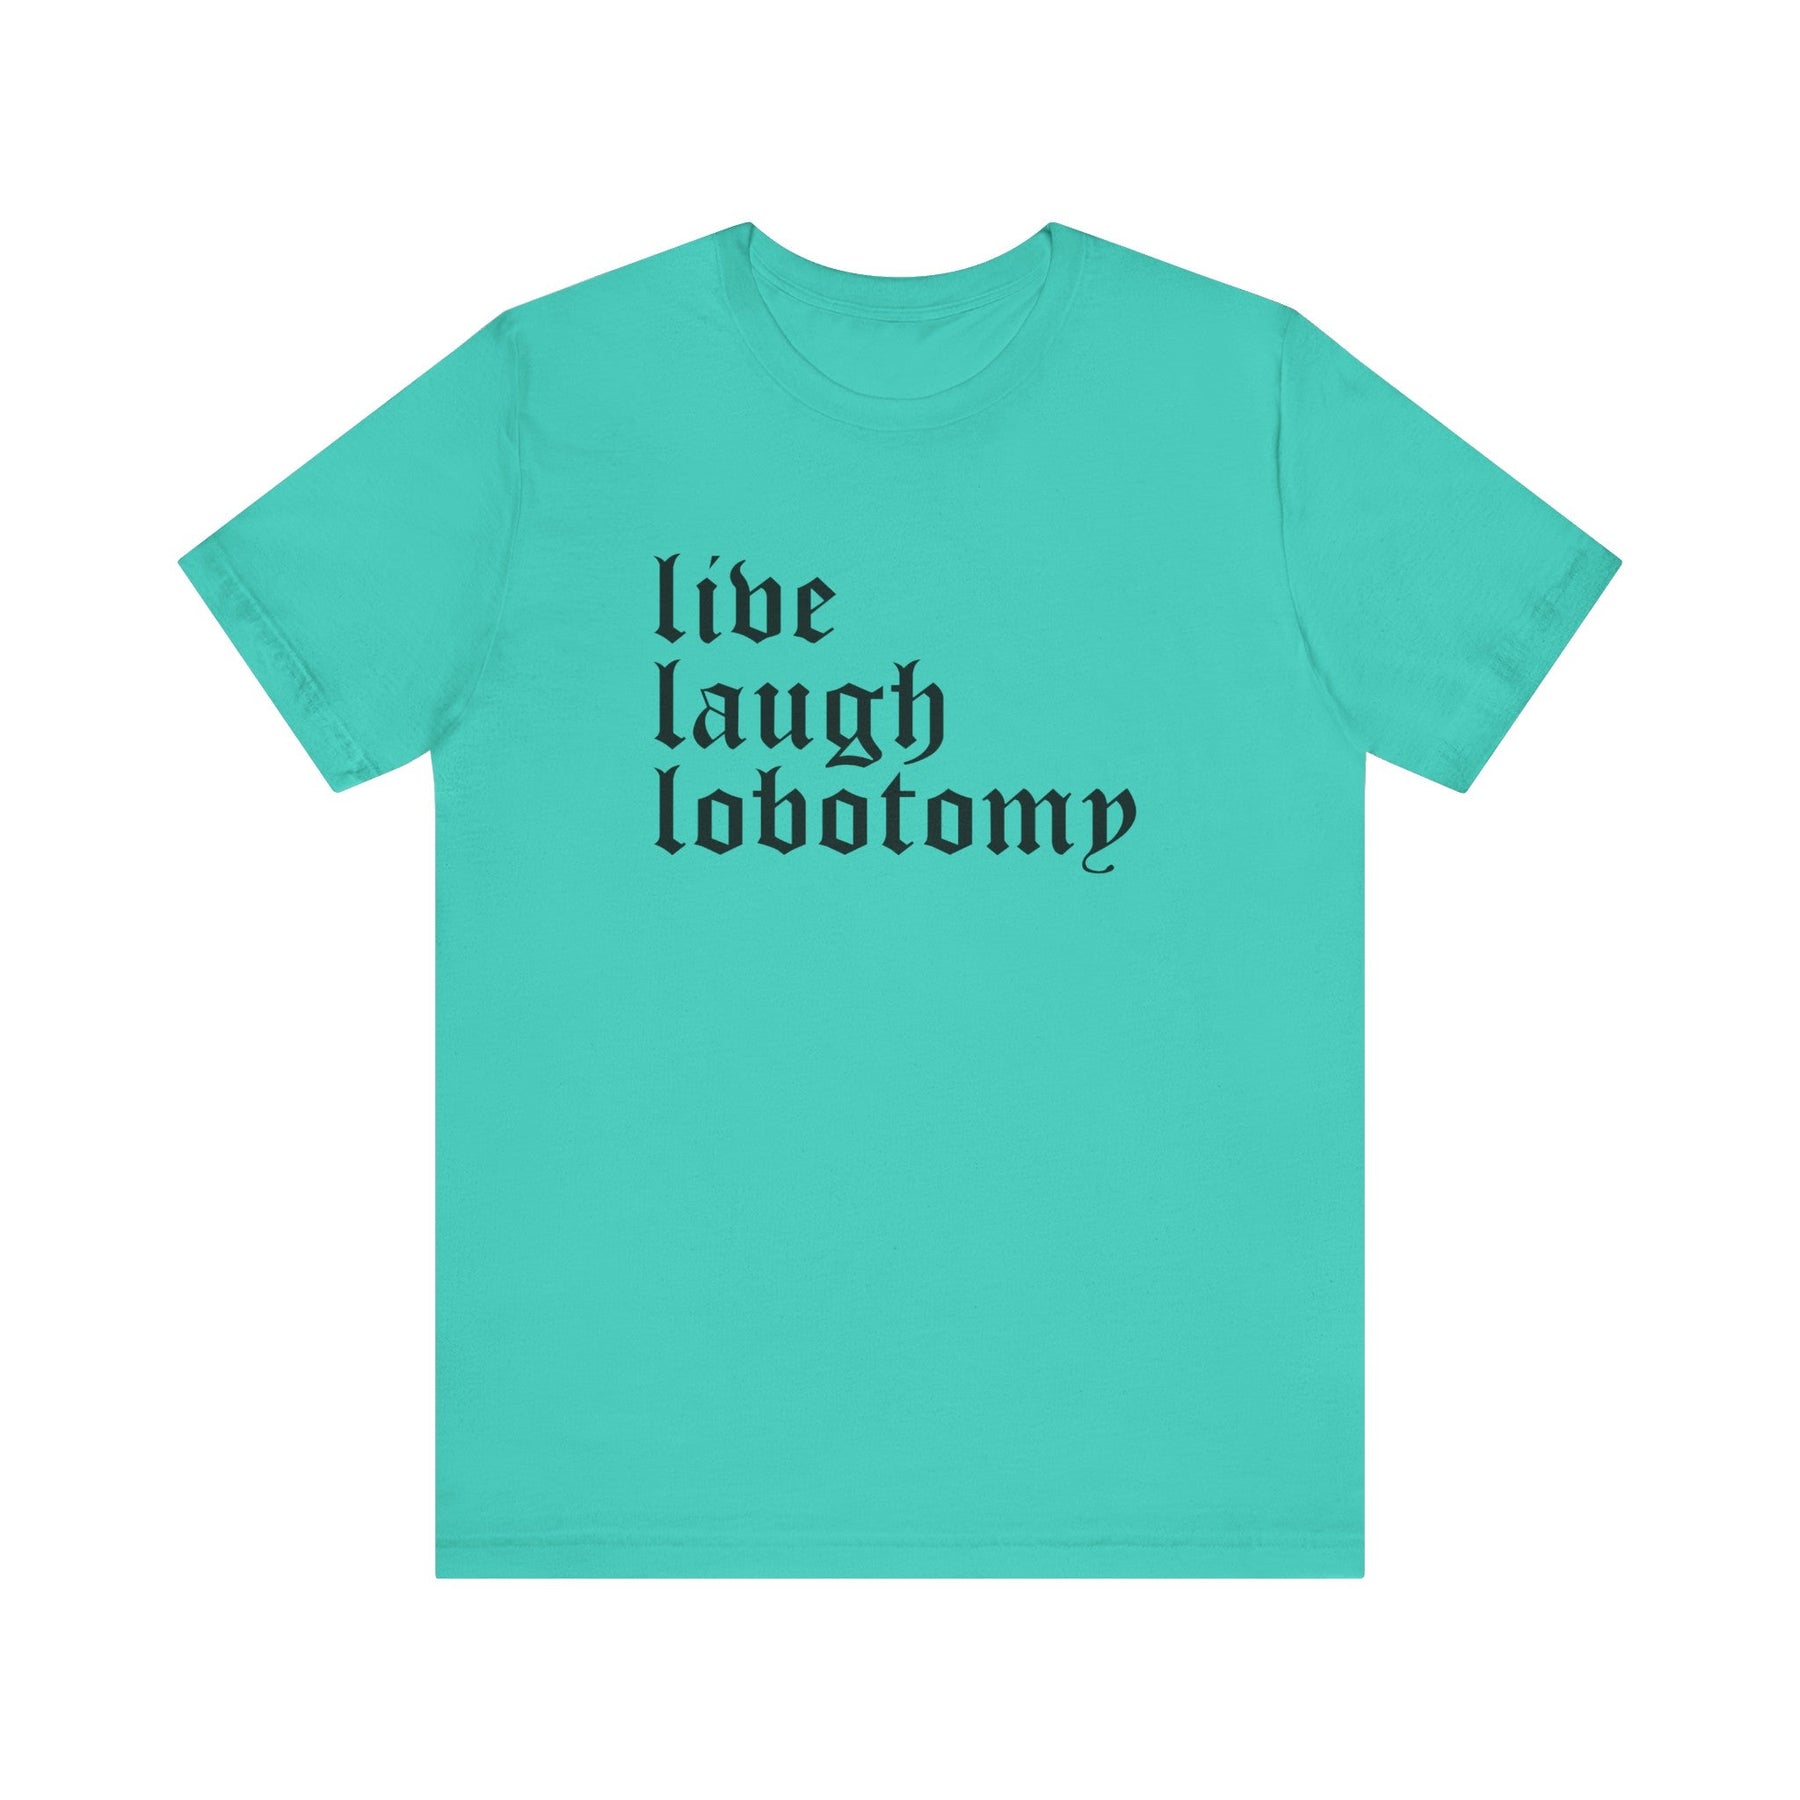 Live Laugh Lobotomy Short Sleeve Tee - Goth Cloth Co.T - Shirt64420031075566615545